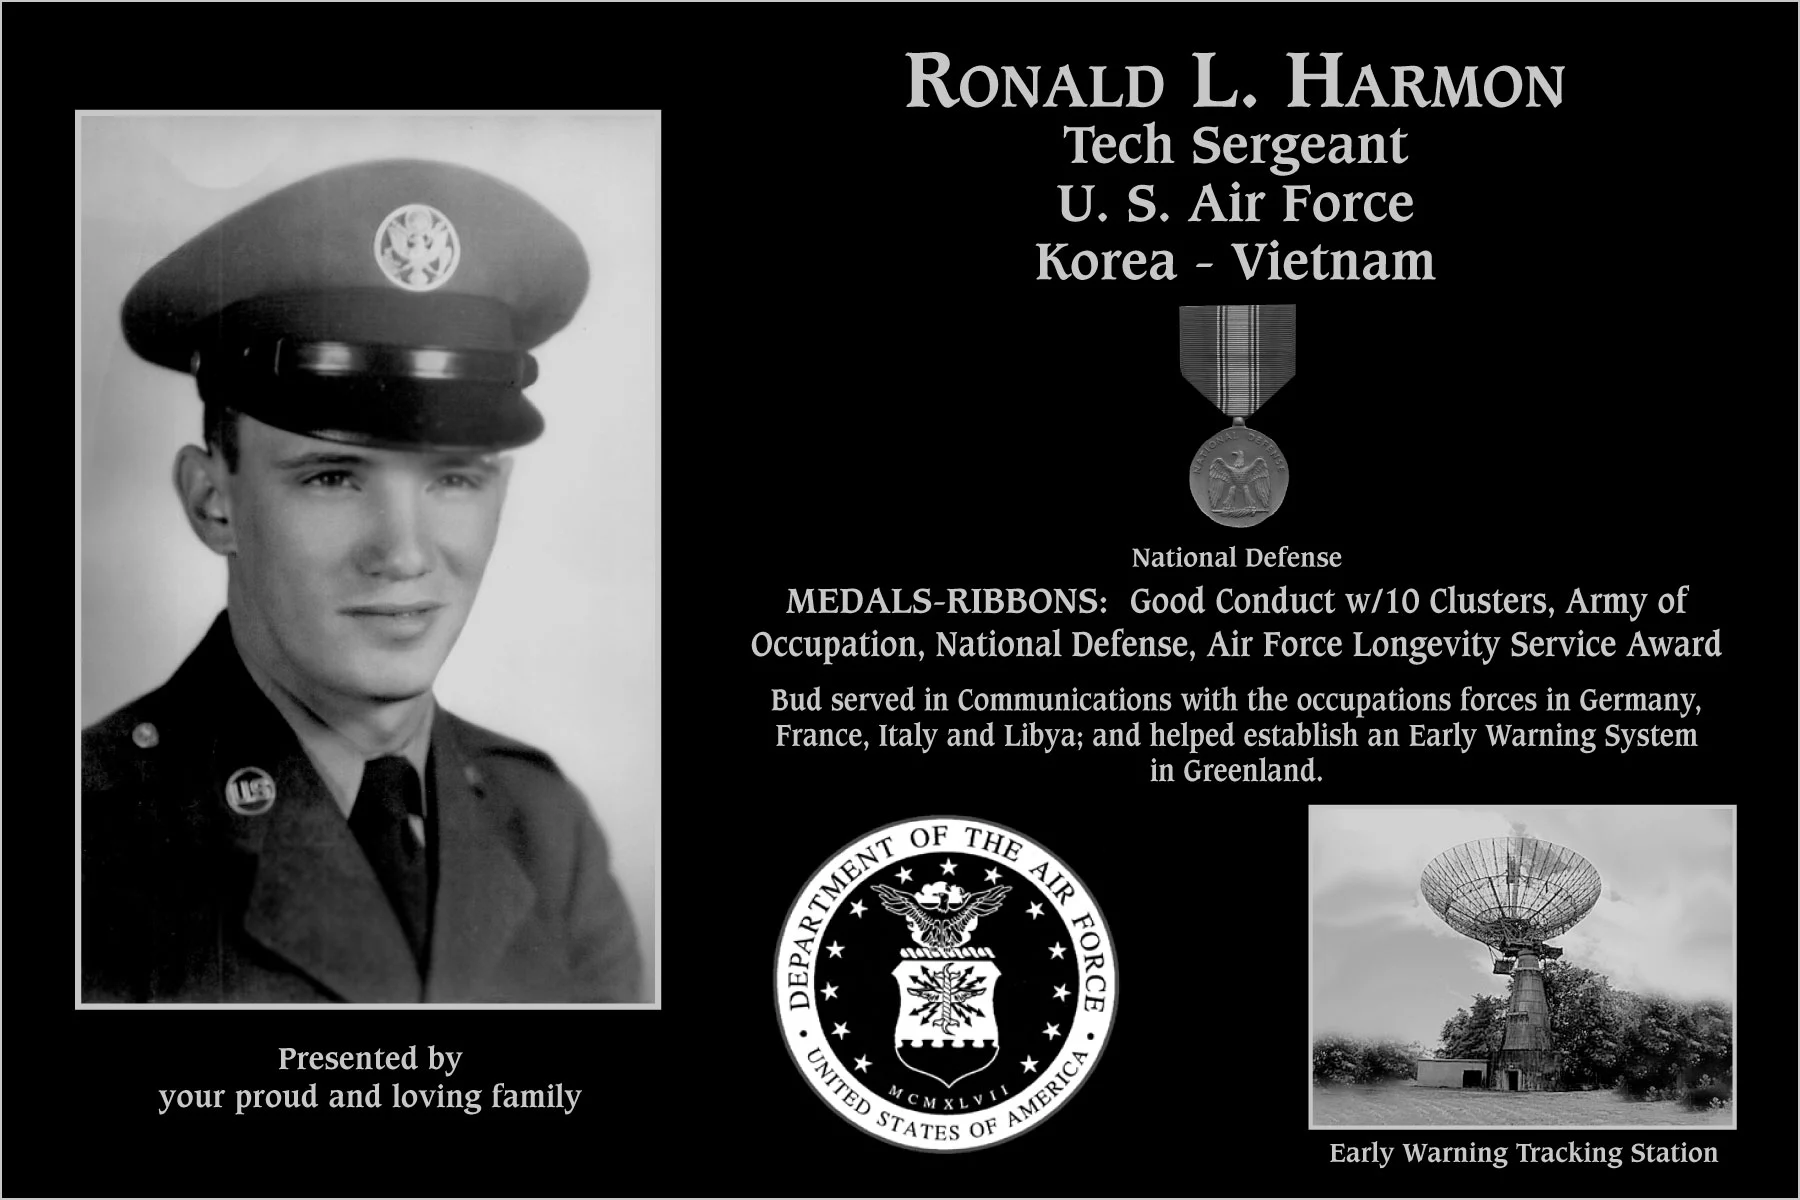 Ronald L “Bud” Harmon